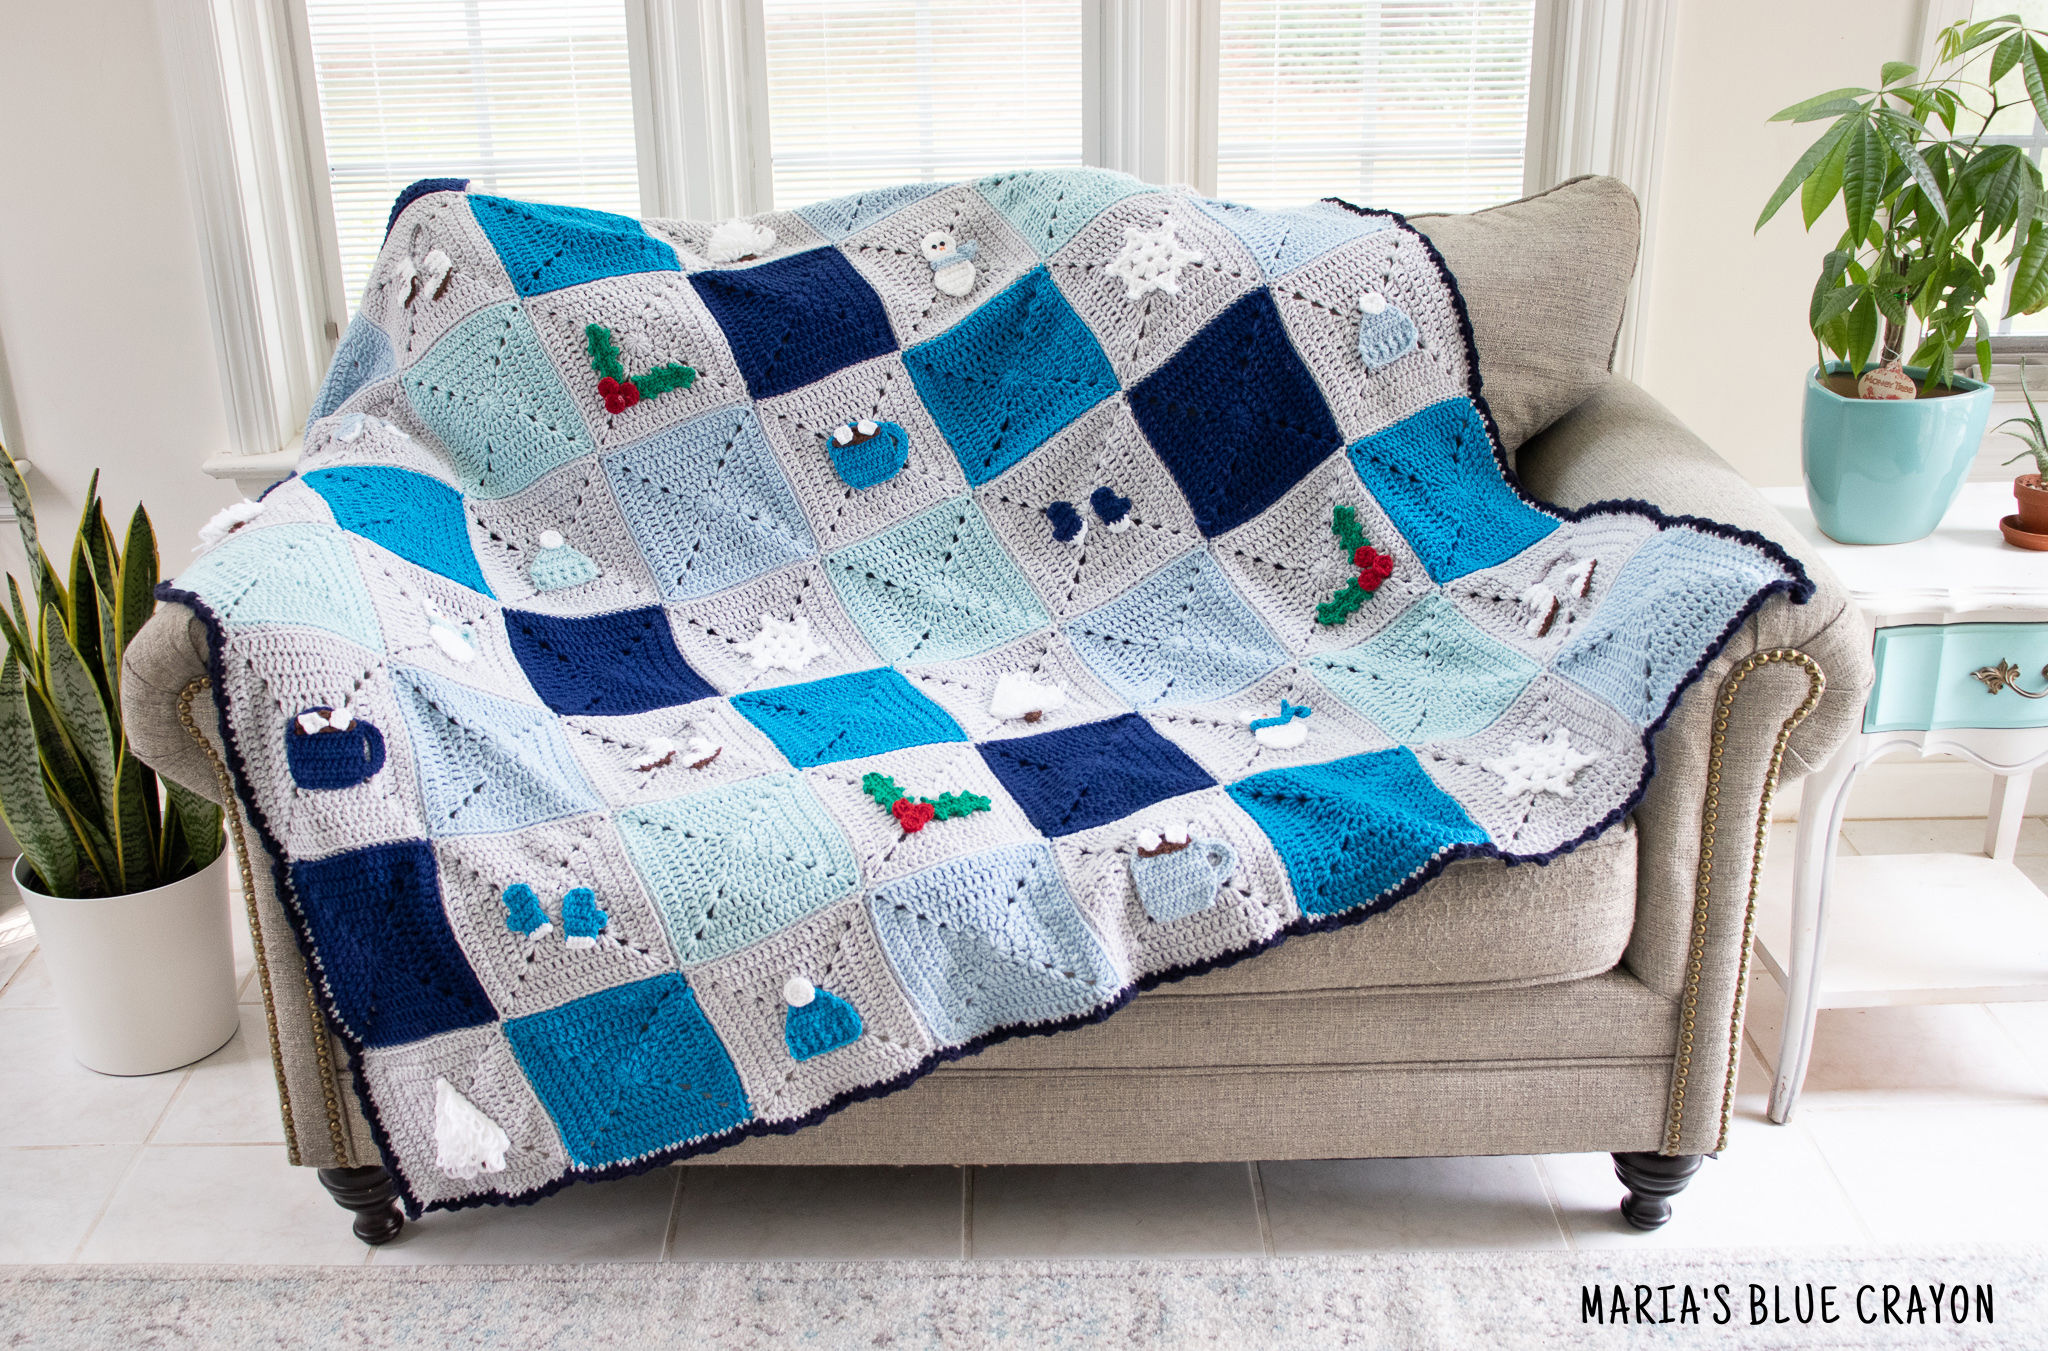 Granny Square Winter Blanket Crochet Pattern - Maria's Blue Crayon